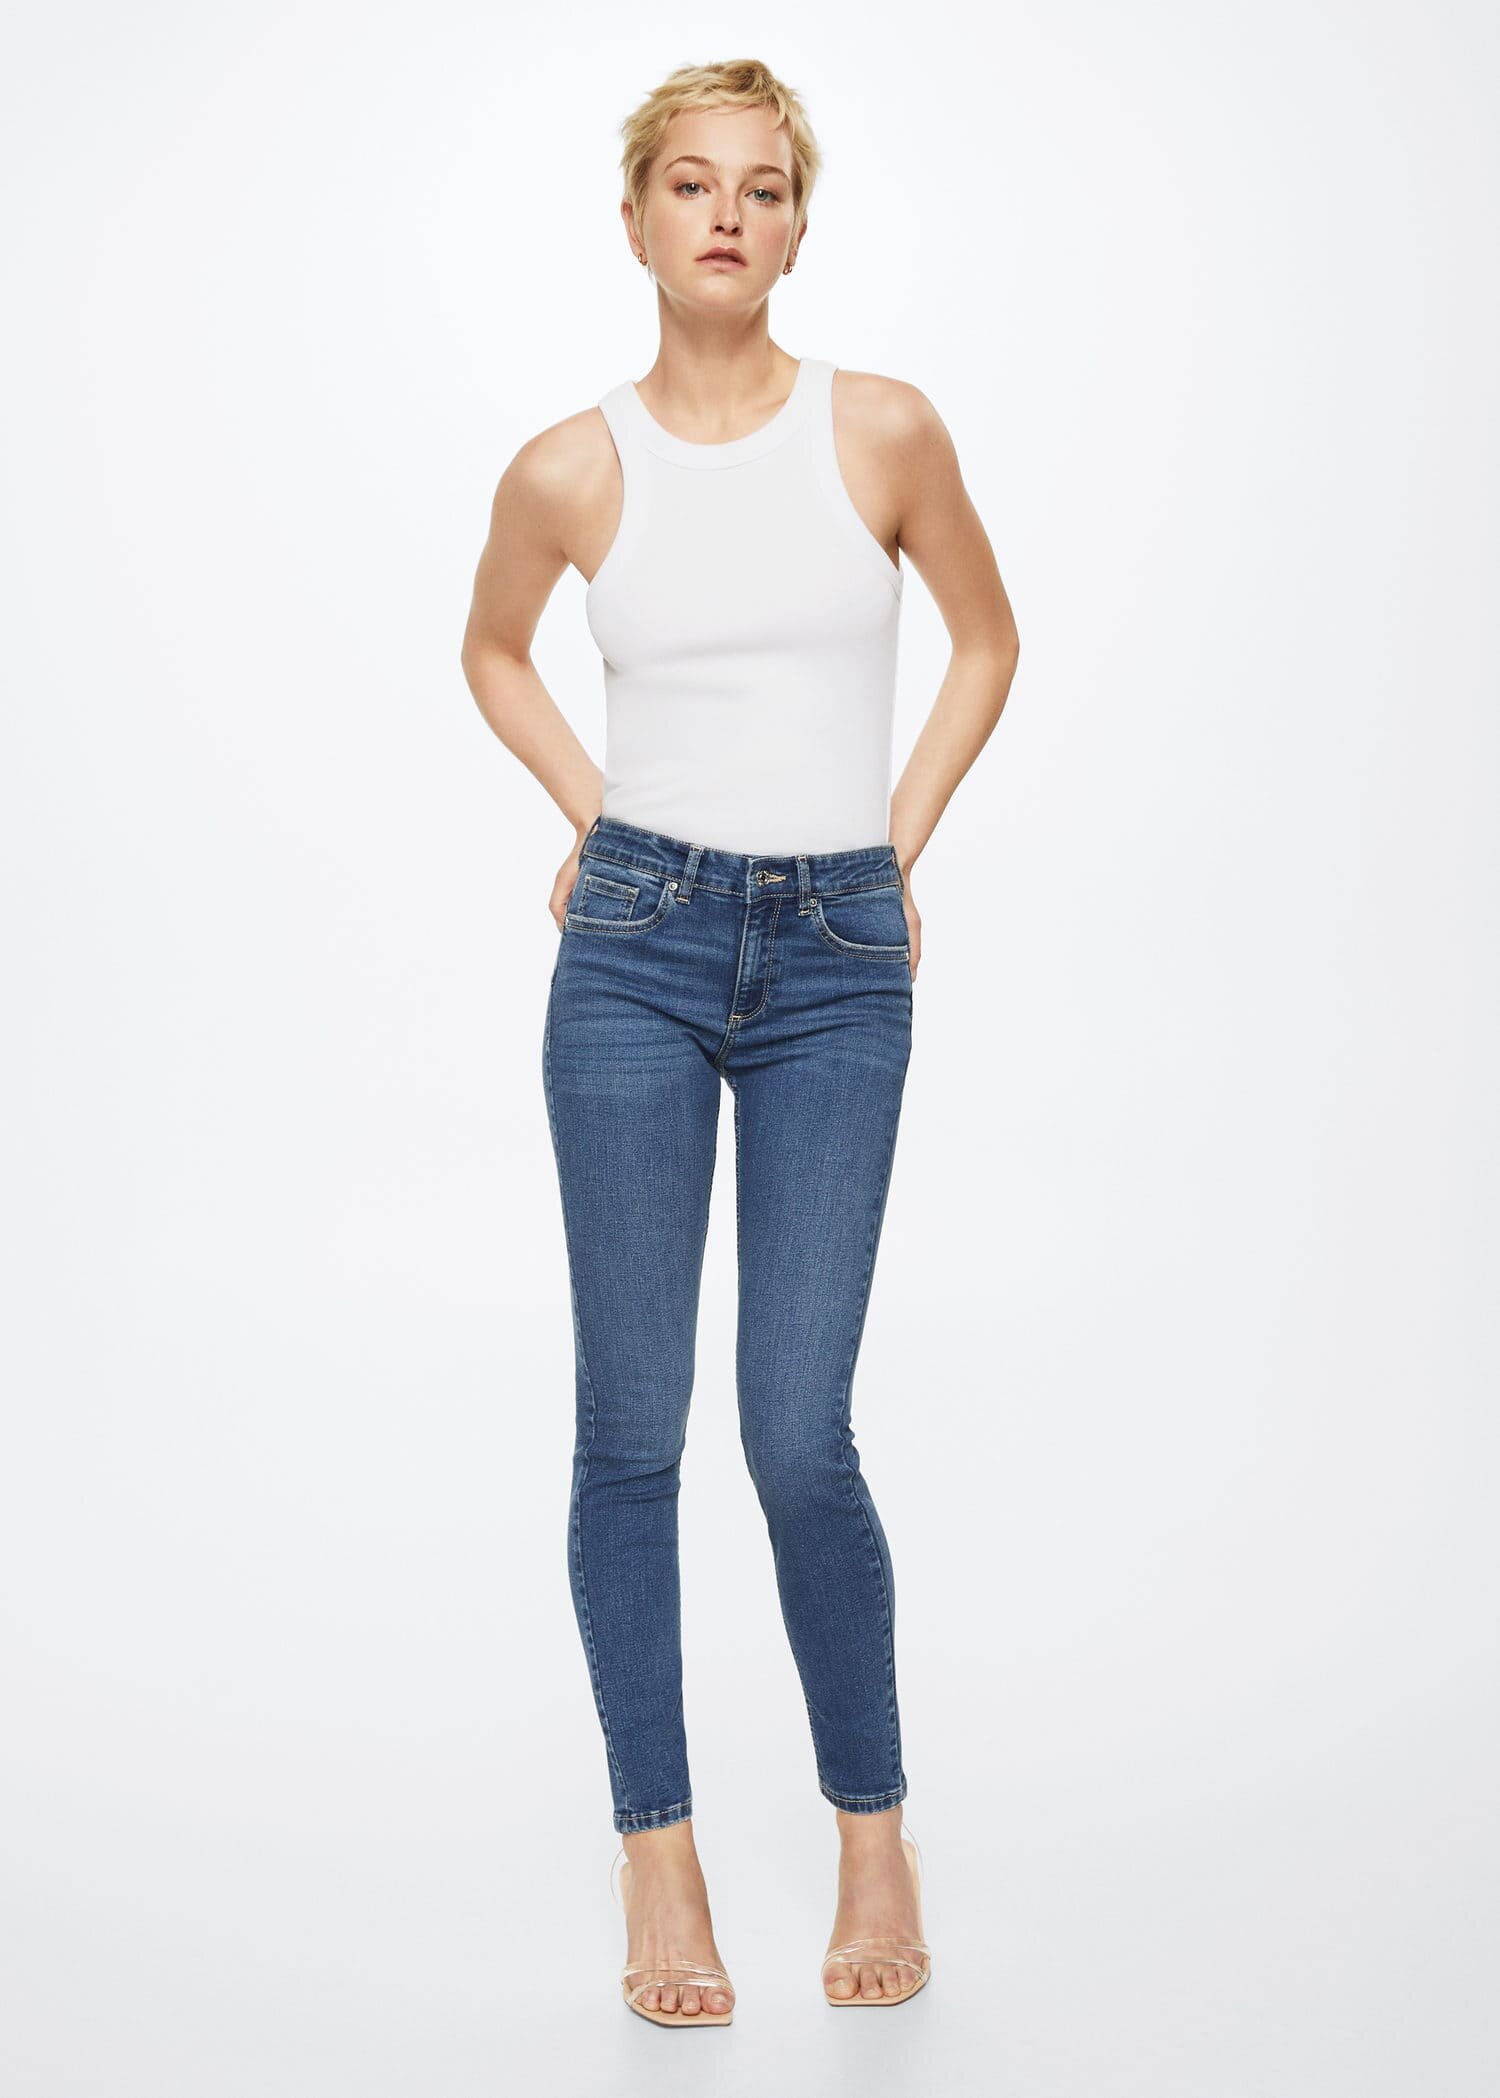 MANGO - Quần Jeans Nữ Pushup